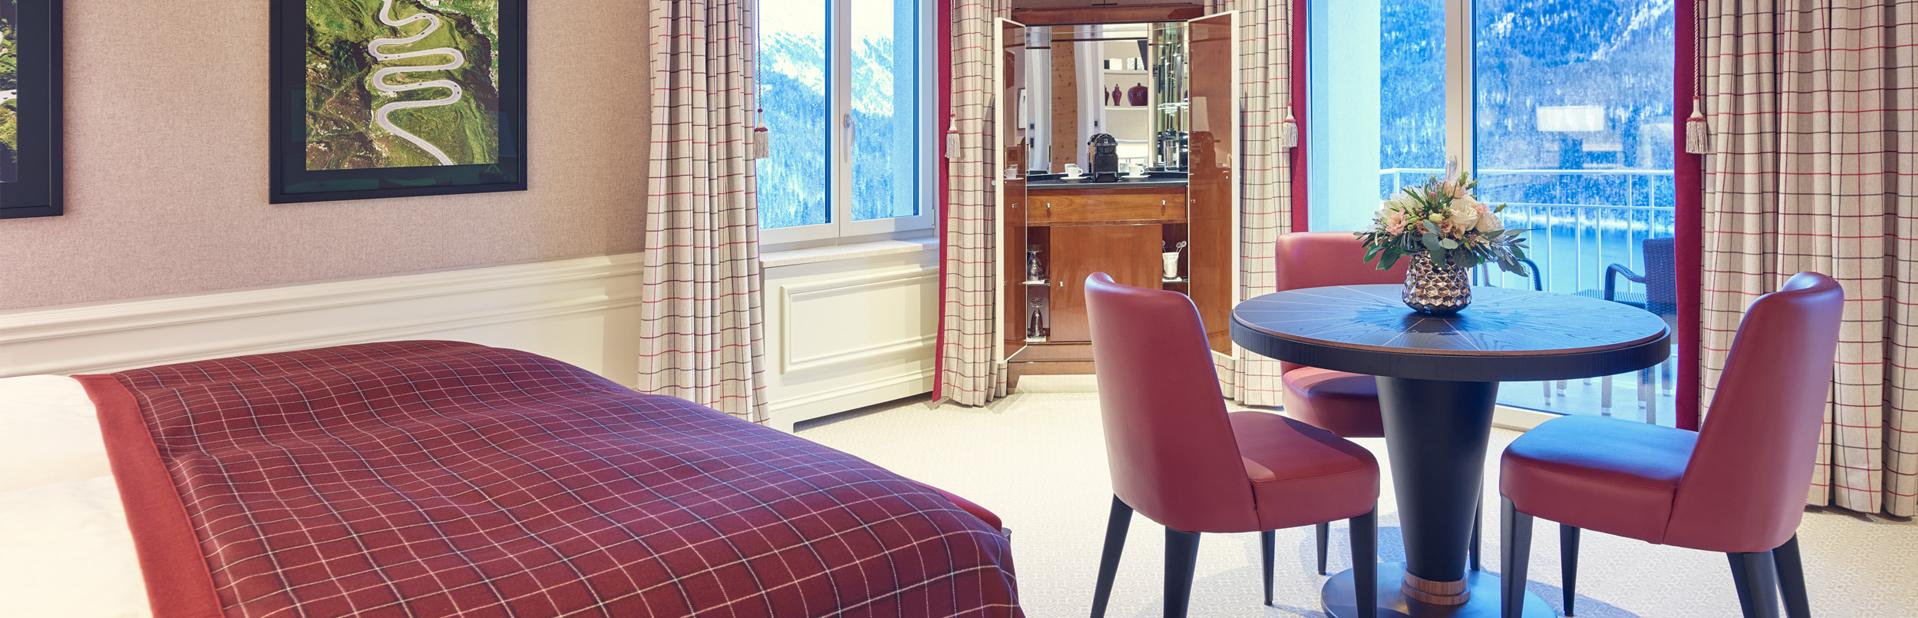 Отель Kulm Hotel St Moritz Санкт Мориц